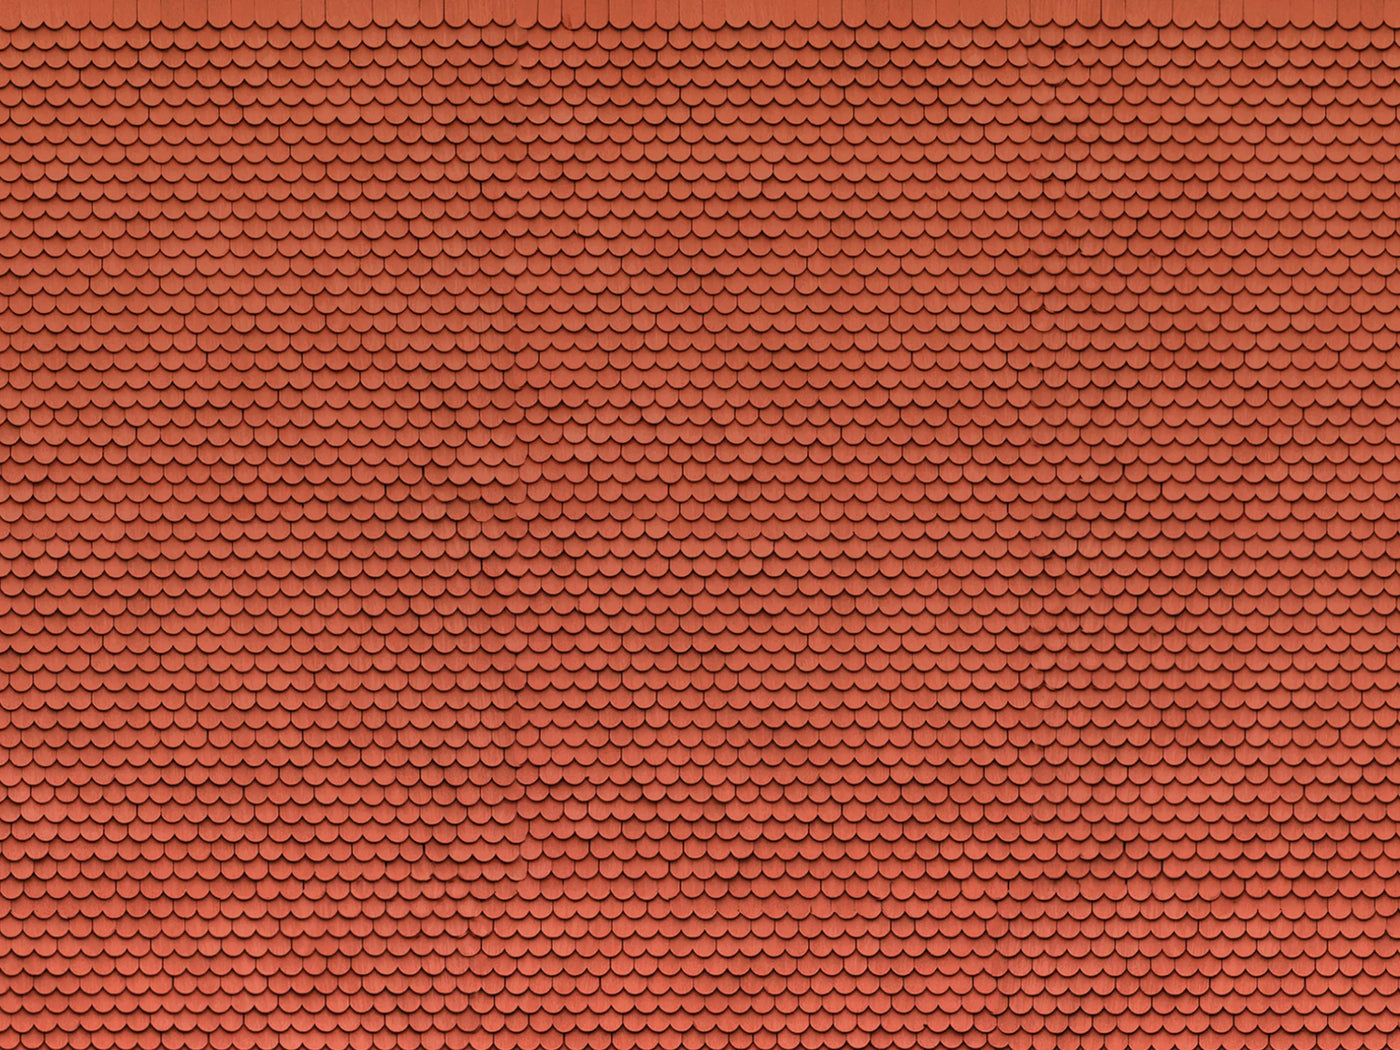 HO 3D Cardboard Sheet   Plain Tile   Red